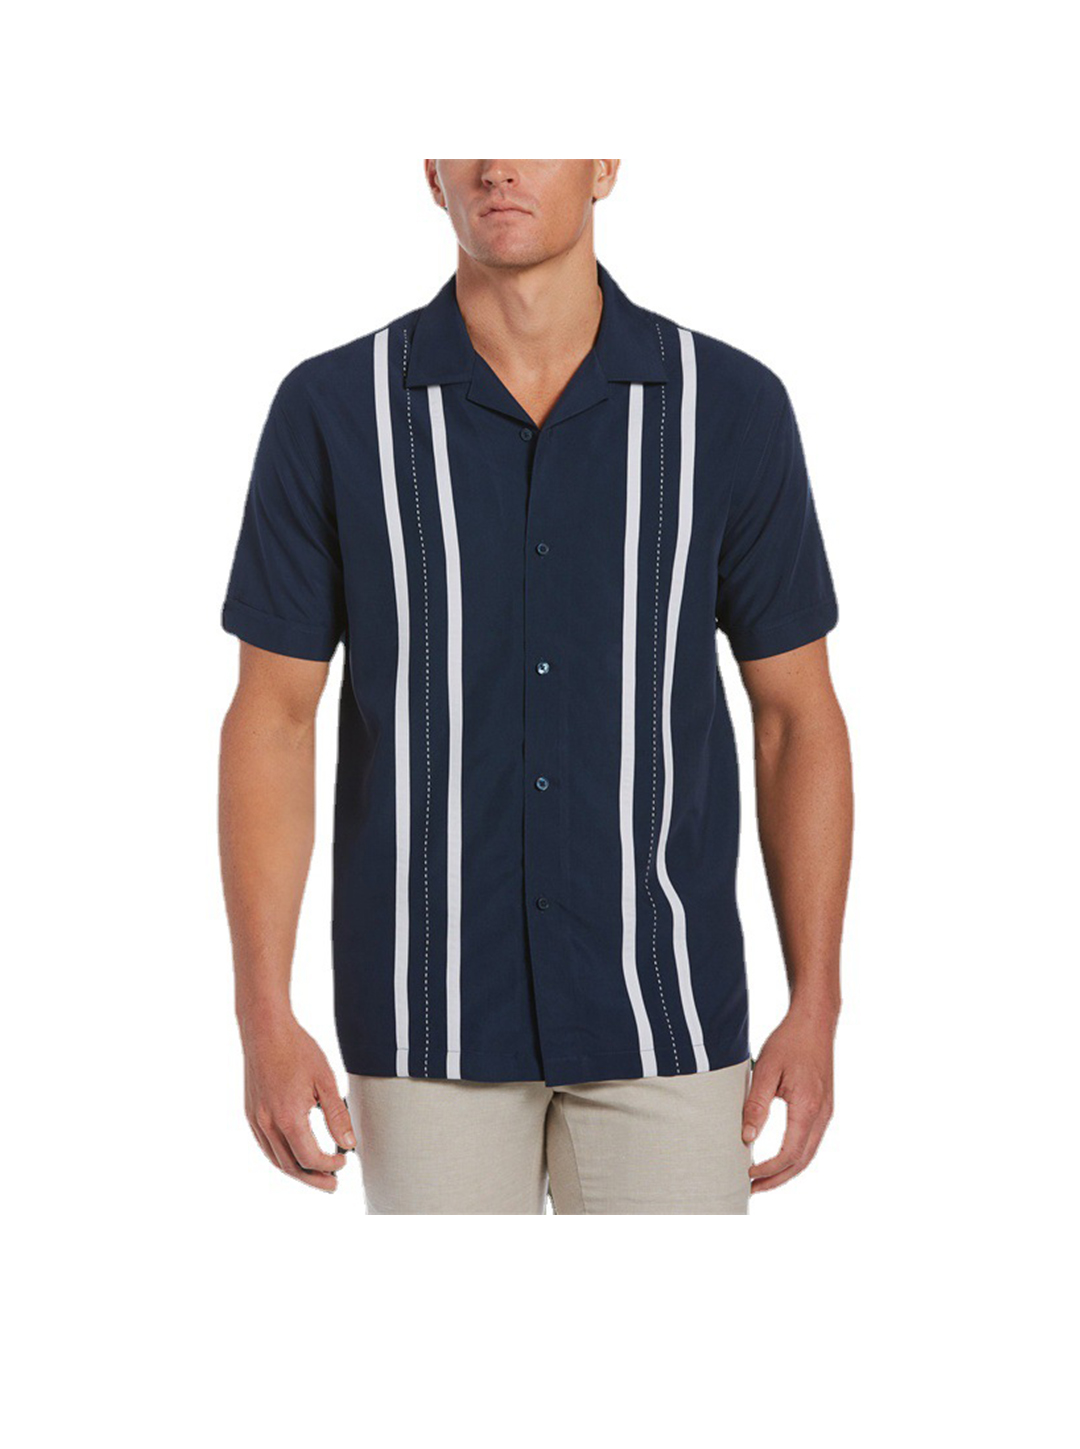 Men's Anthony Printed Striped Short Sleeve Shirt-poisonstreetwear.com